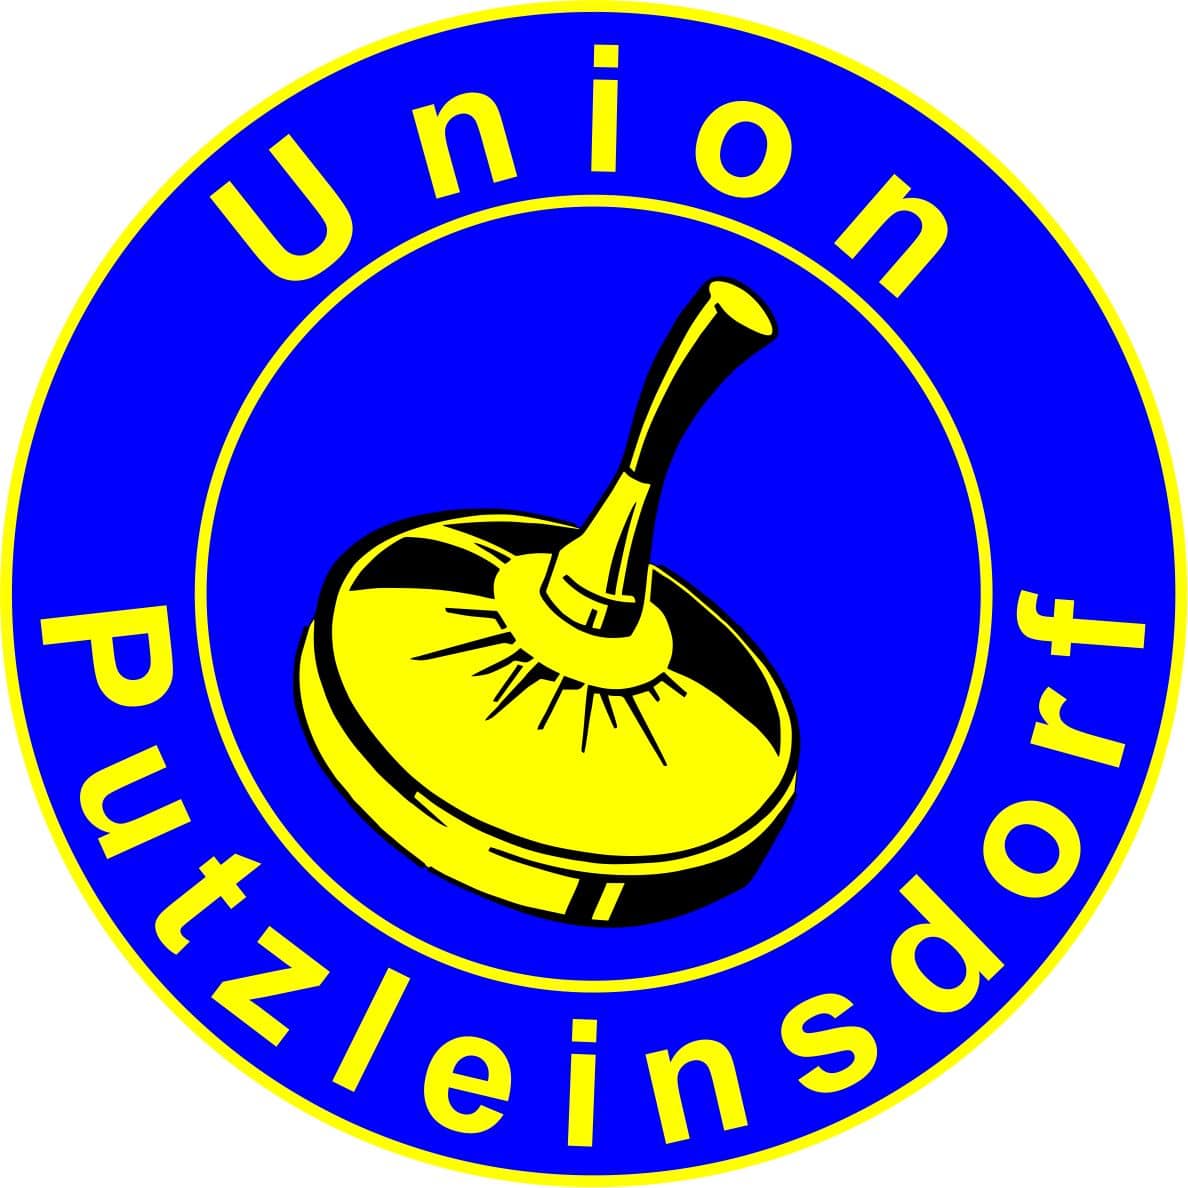 Union Stocksport Putzleinsdorf 1 (OÖ)